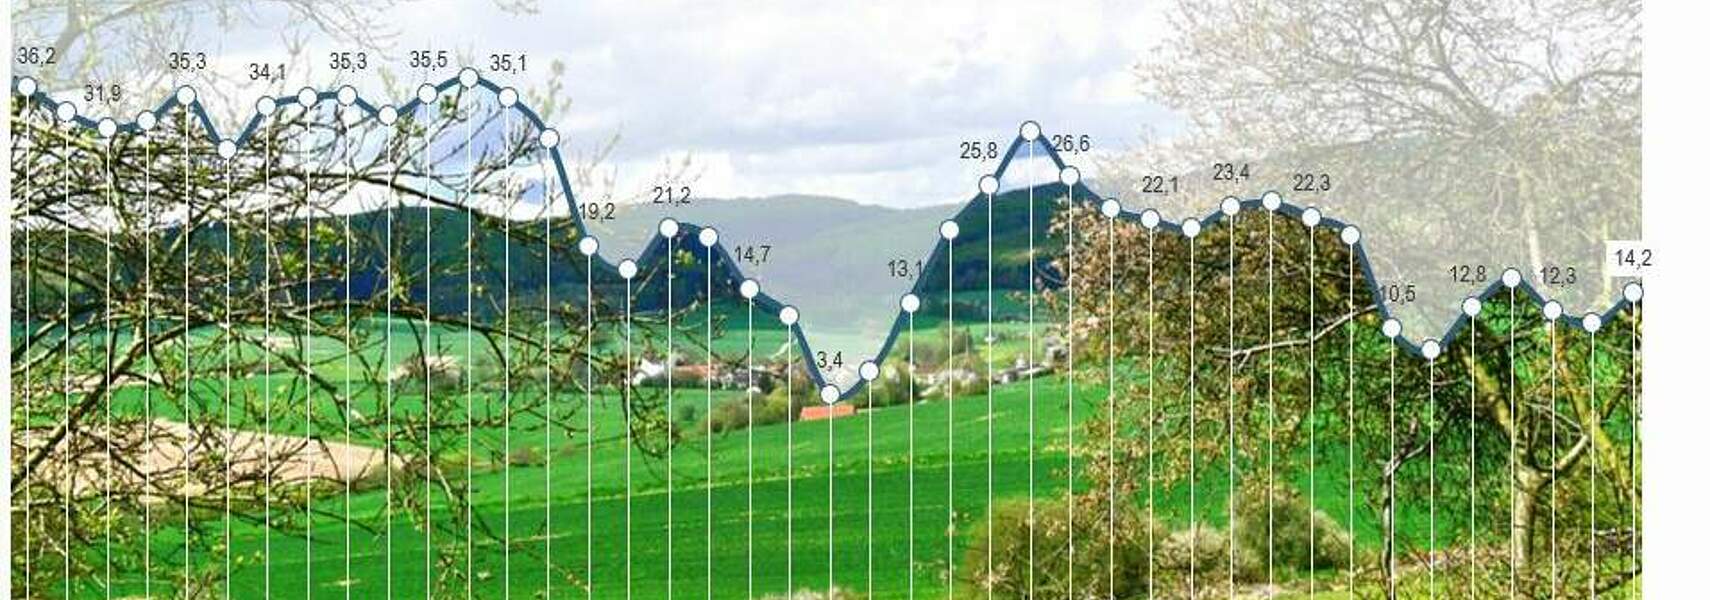 Konjunkturbarometer Agrar